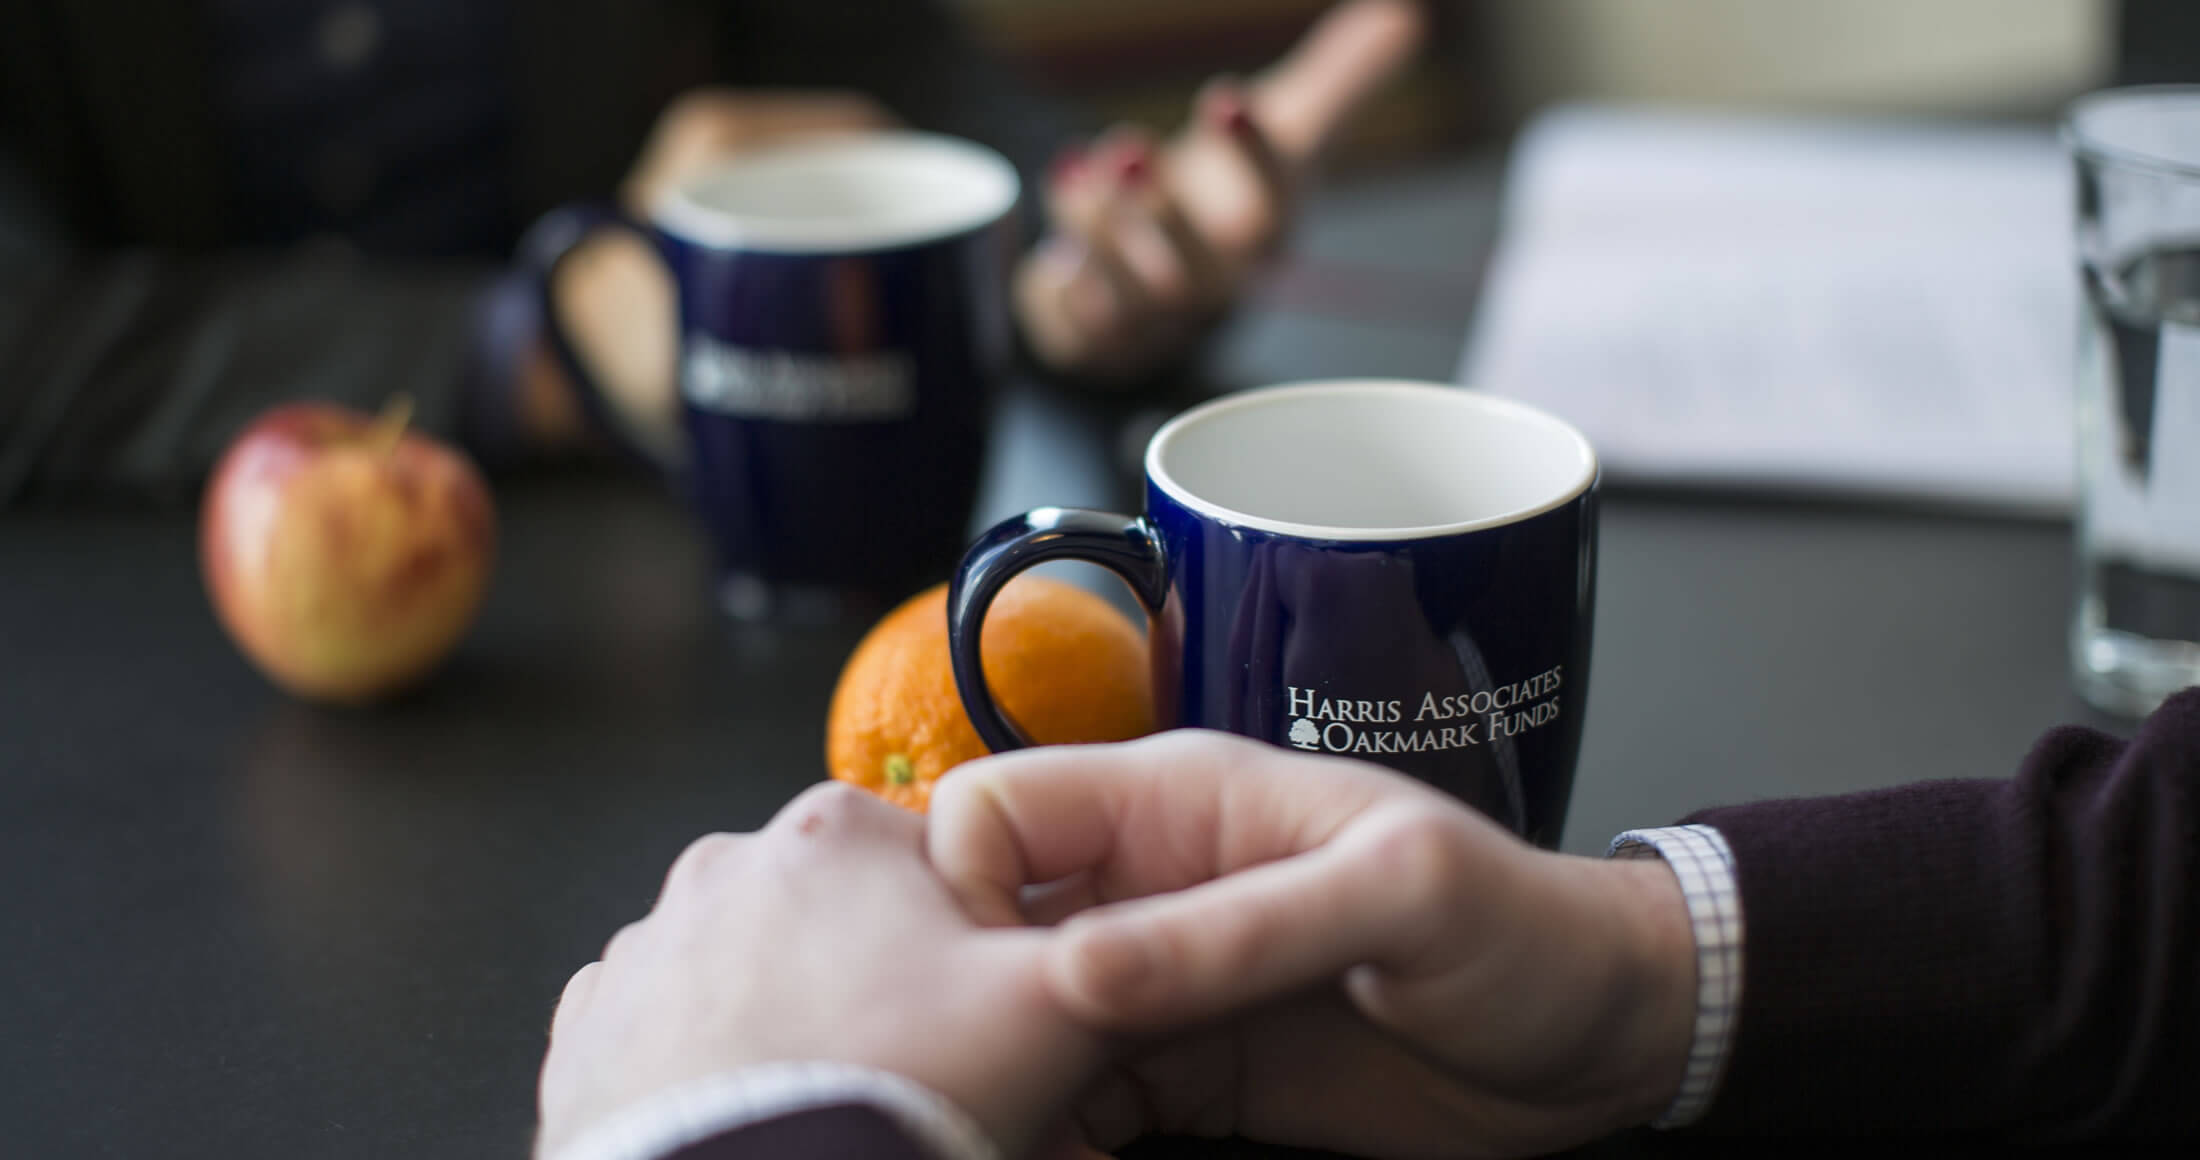 Hands on a table with oranges and a Harris-Oakmark coffee mug